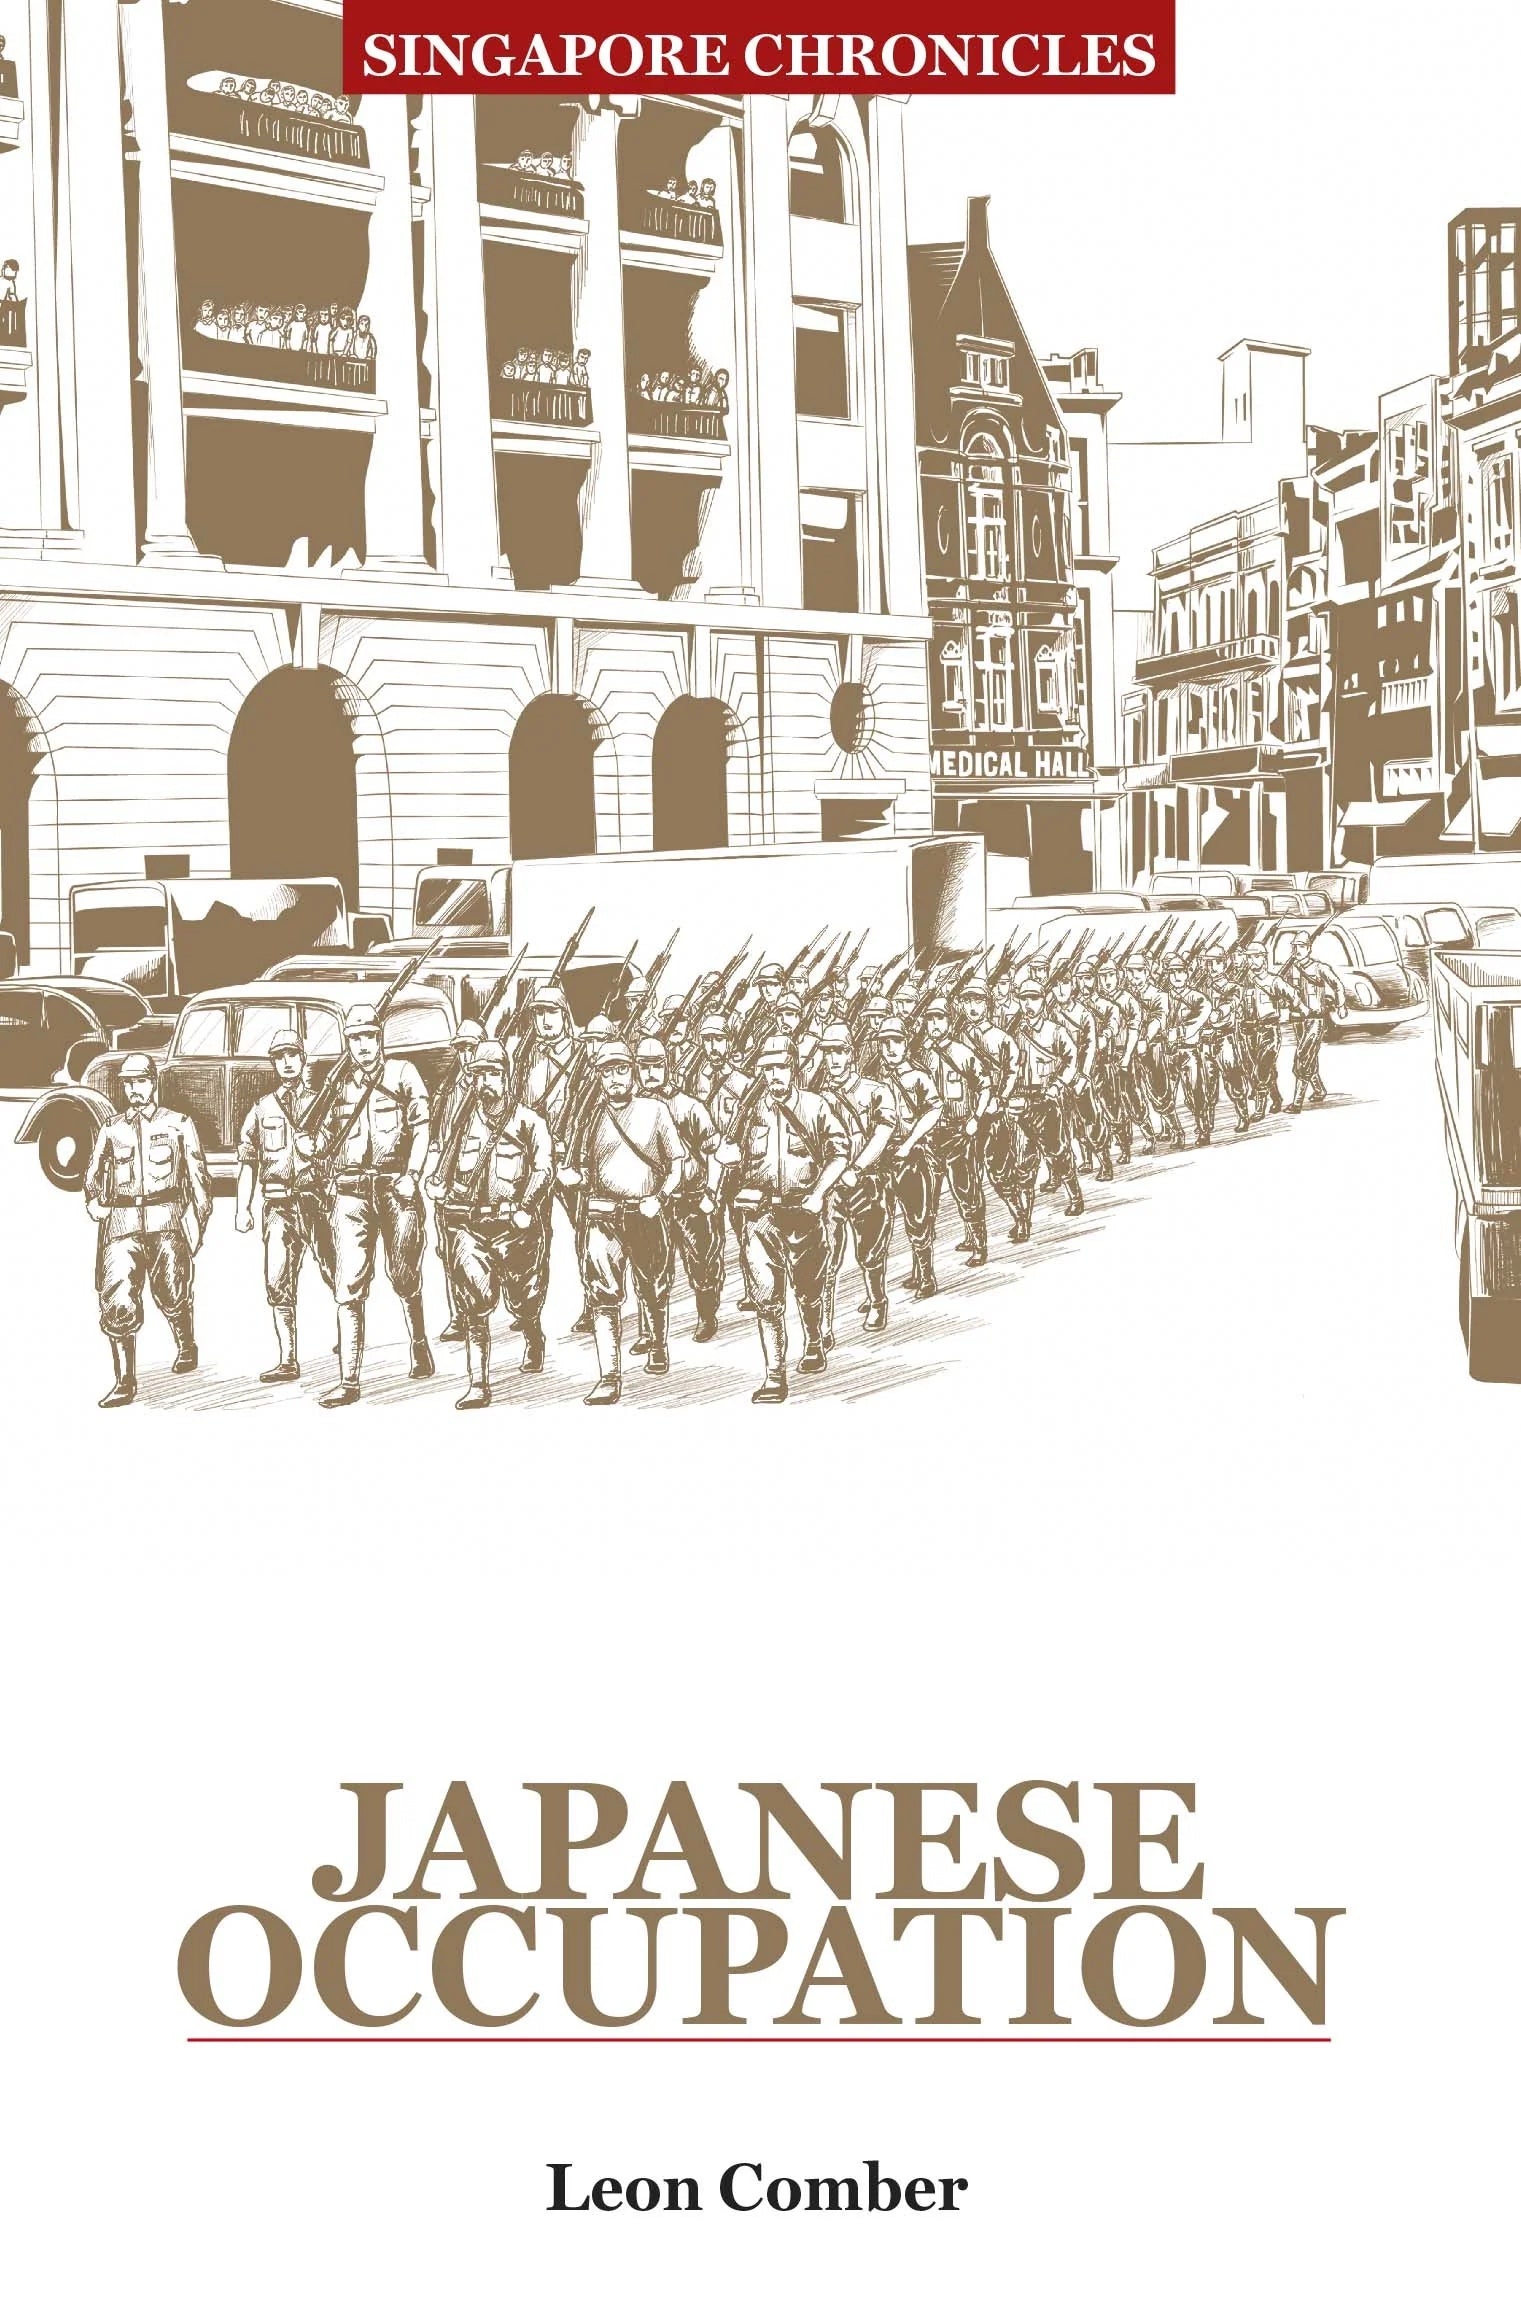 Singapore Chronicles: Japanese Occupation